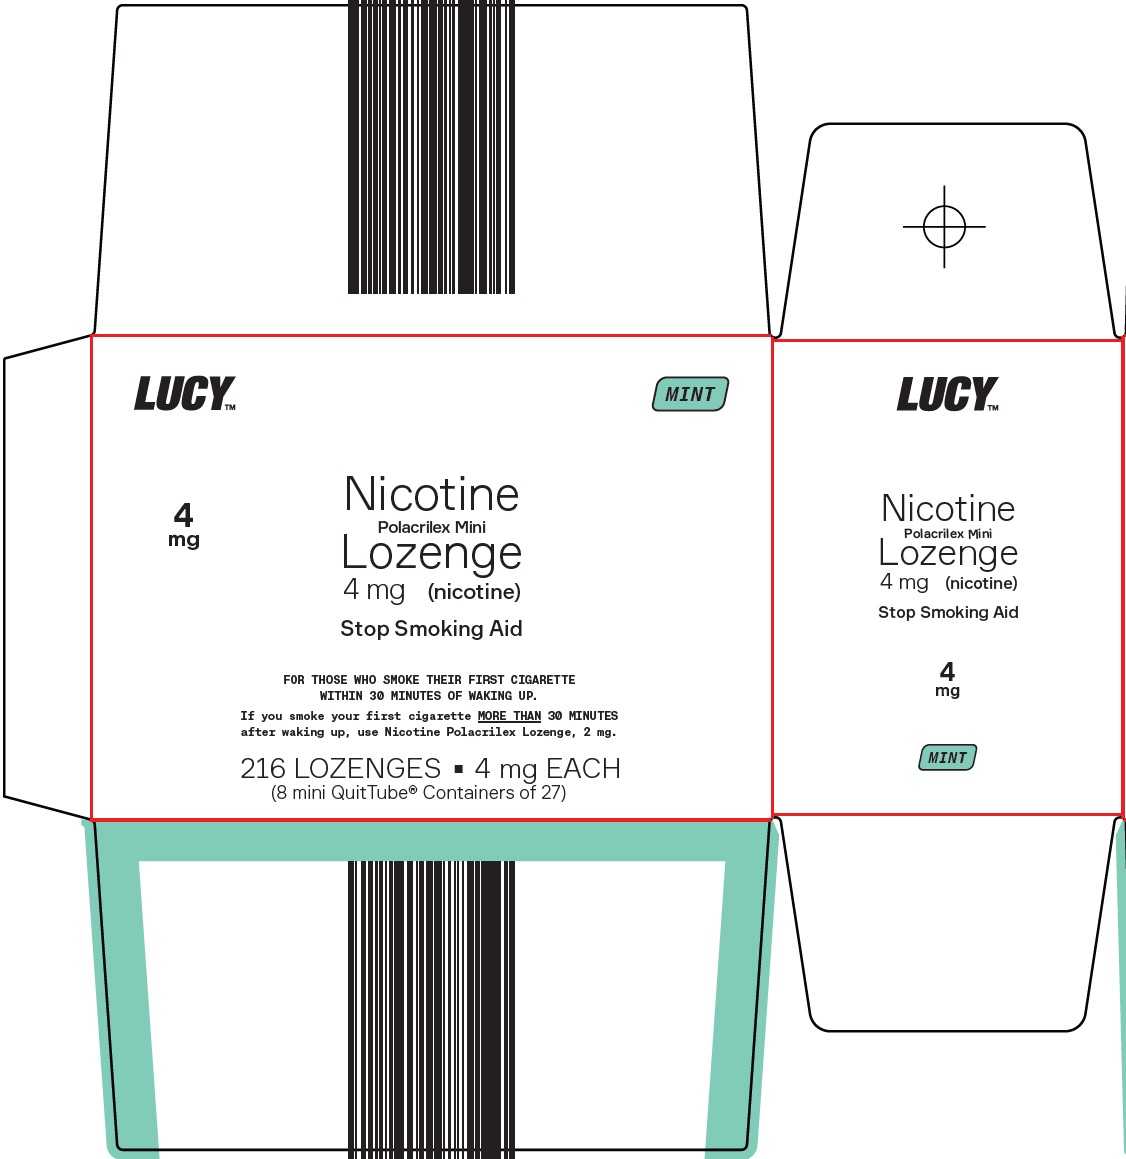 Nicotine Polacrilex Mini Lozenge 4 mg Carton Image 1